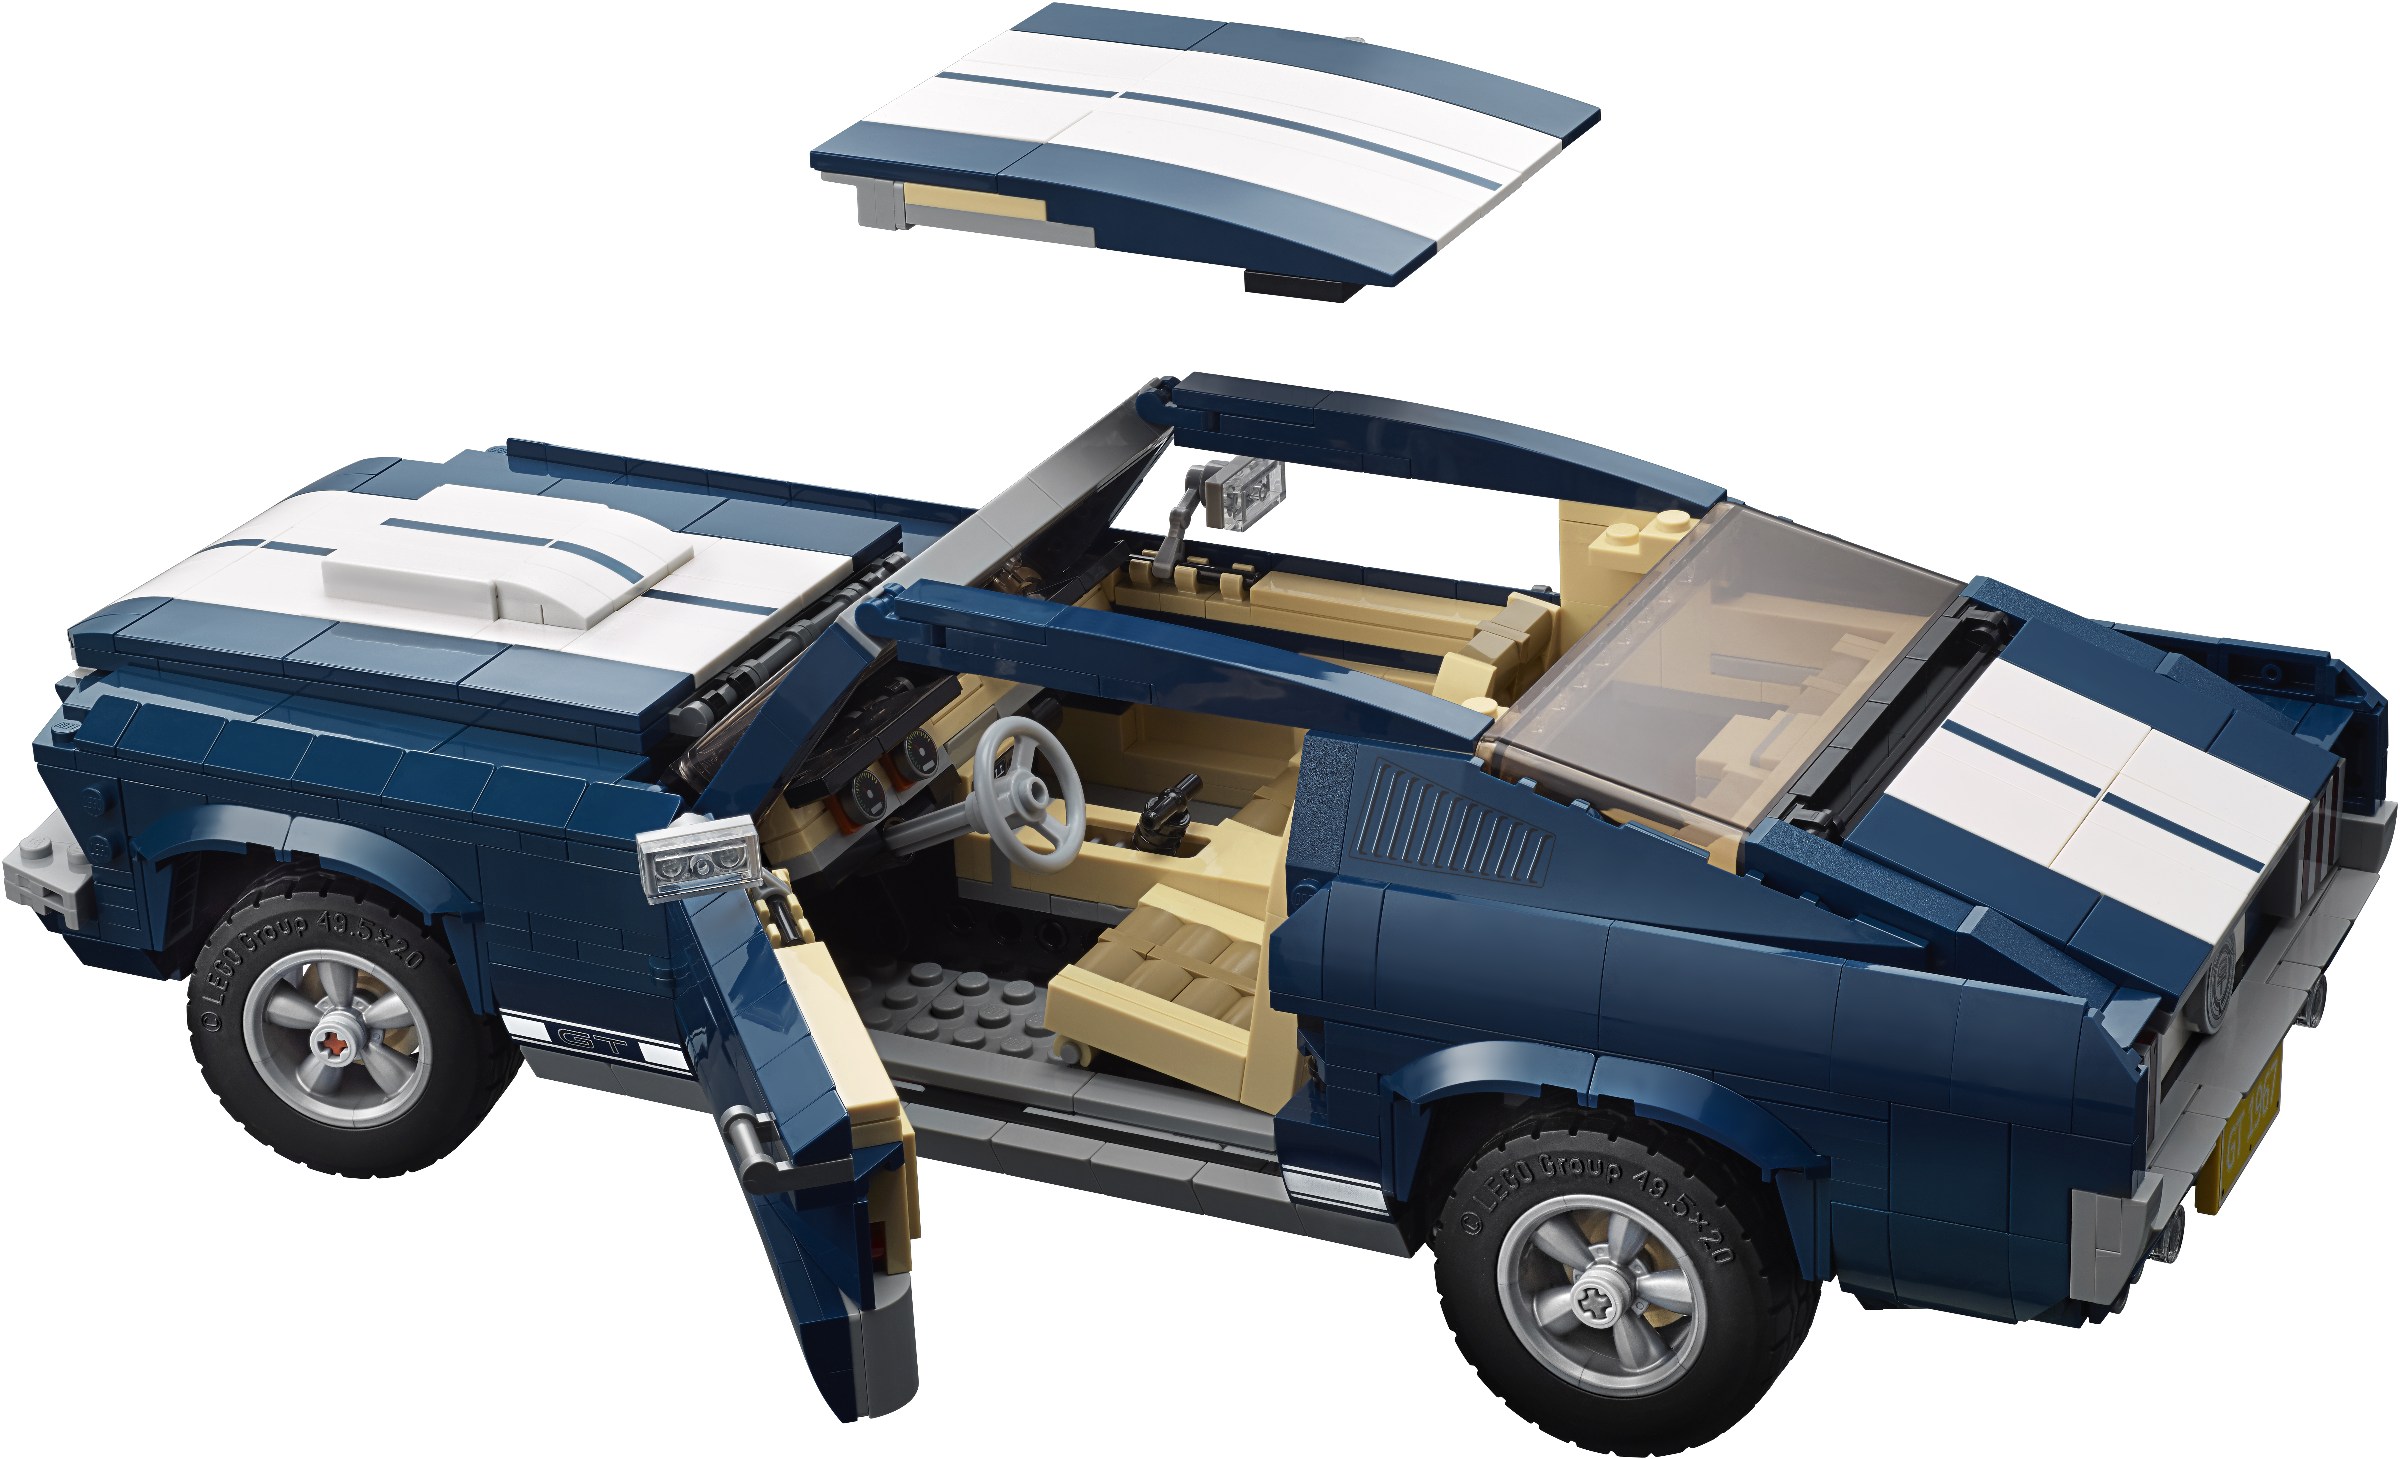 LEGO 10265 Ford Mustang lieferbar! Ab wann mit Rabatt verfügbar?